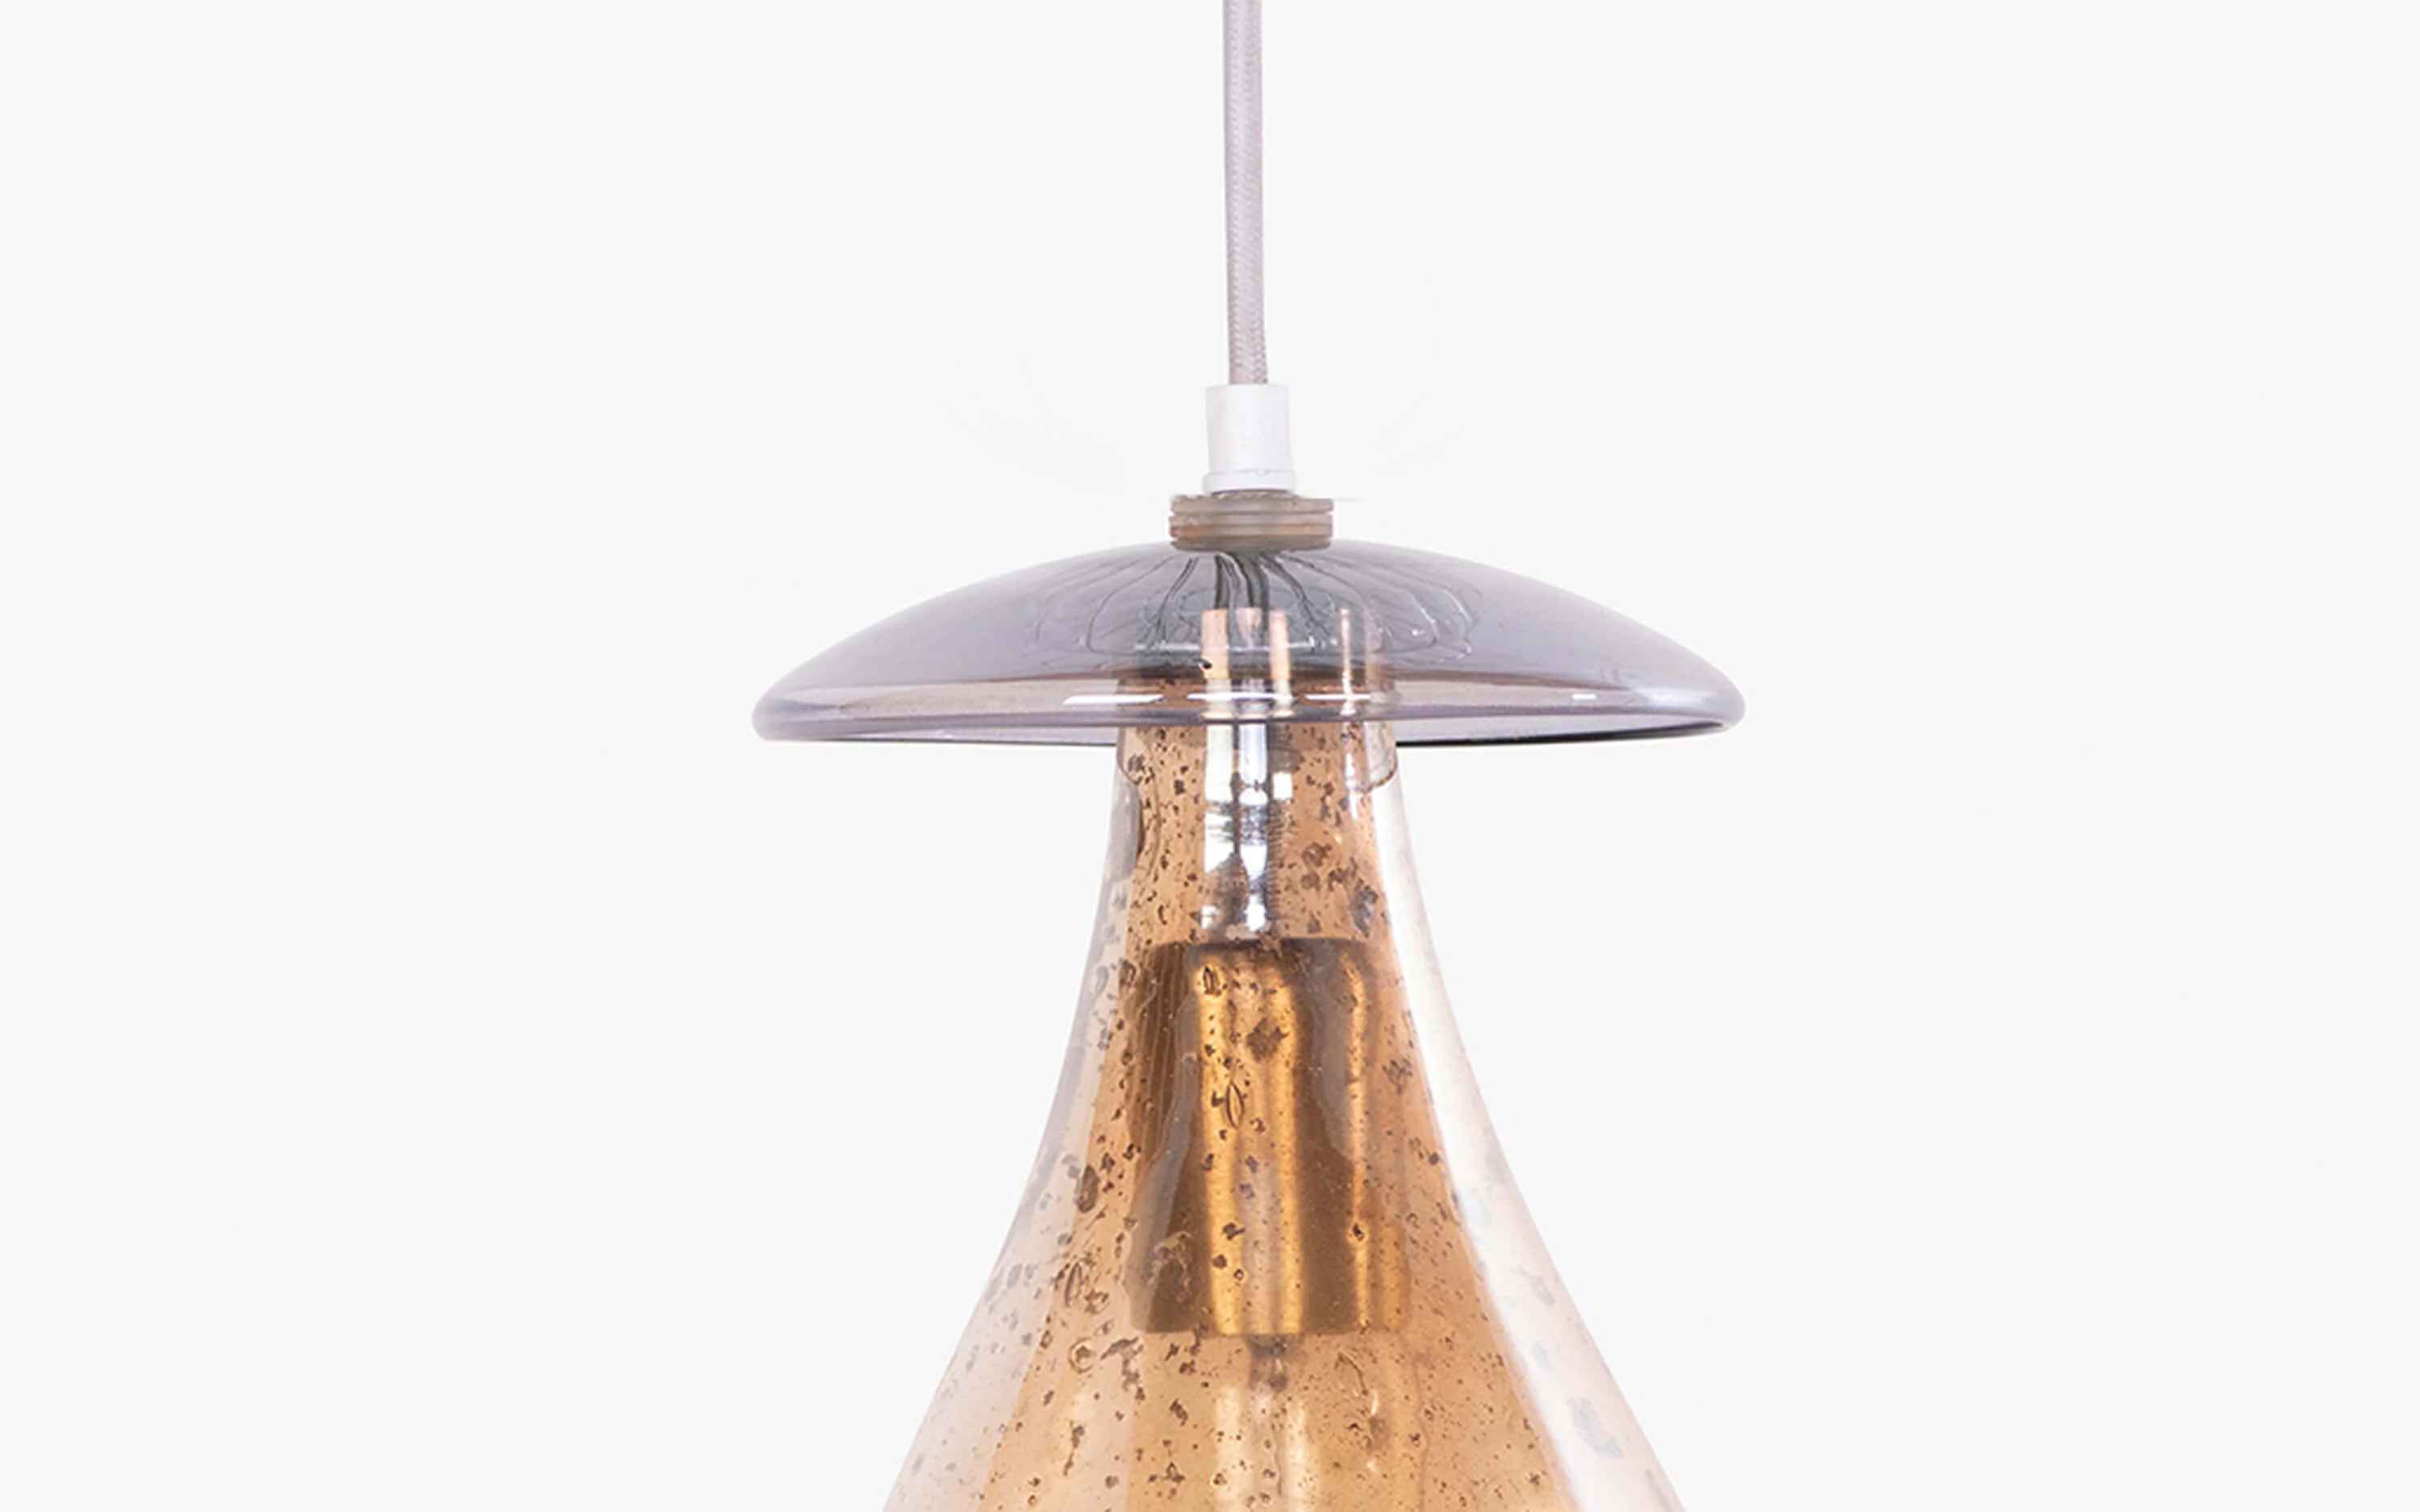 Henka Green Hanging Lamp Tall